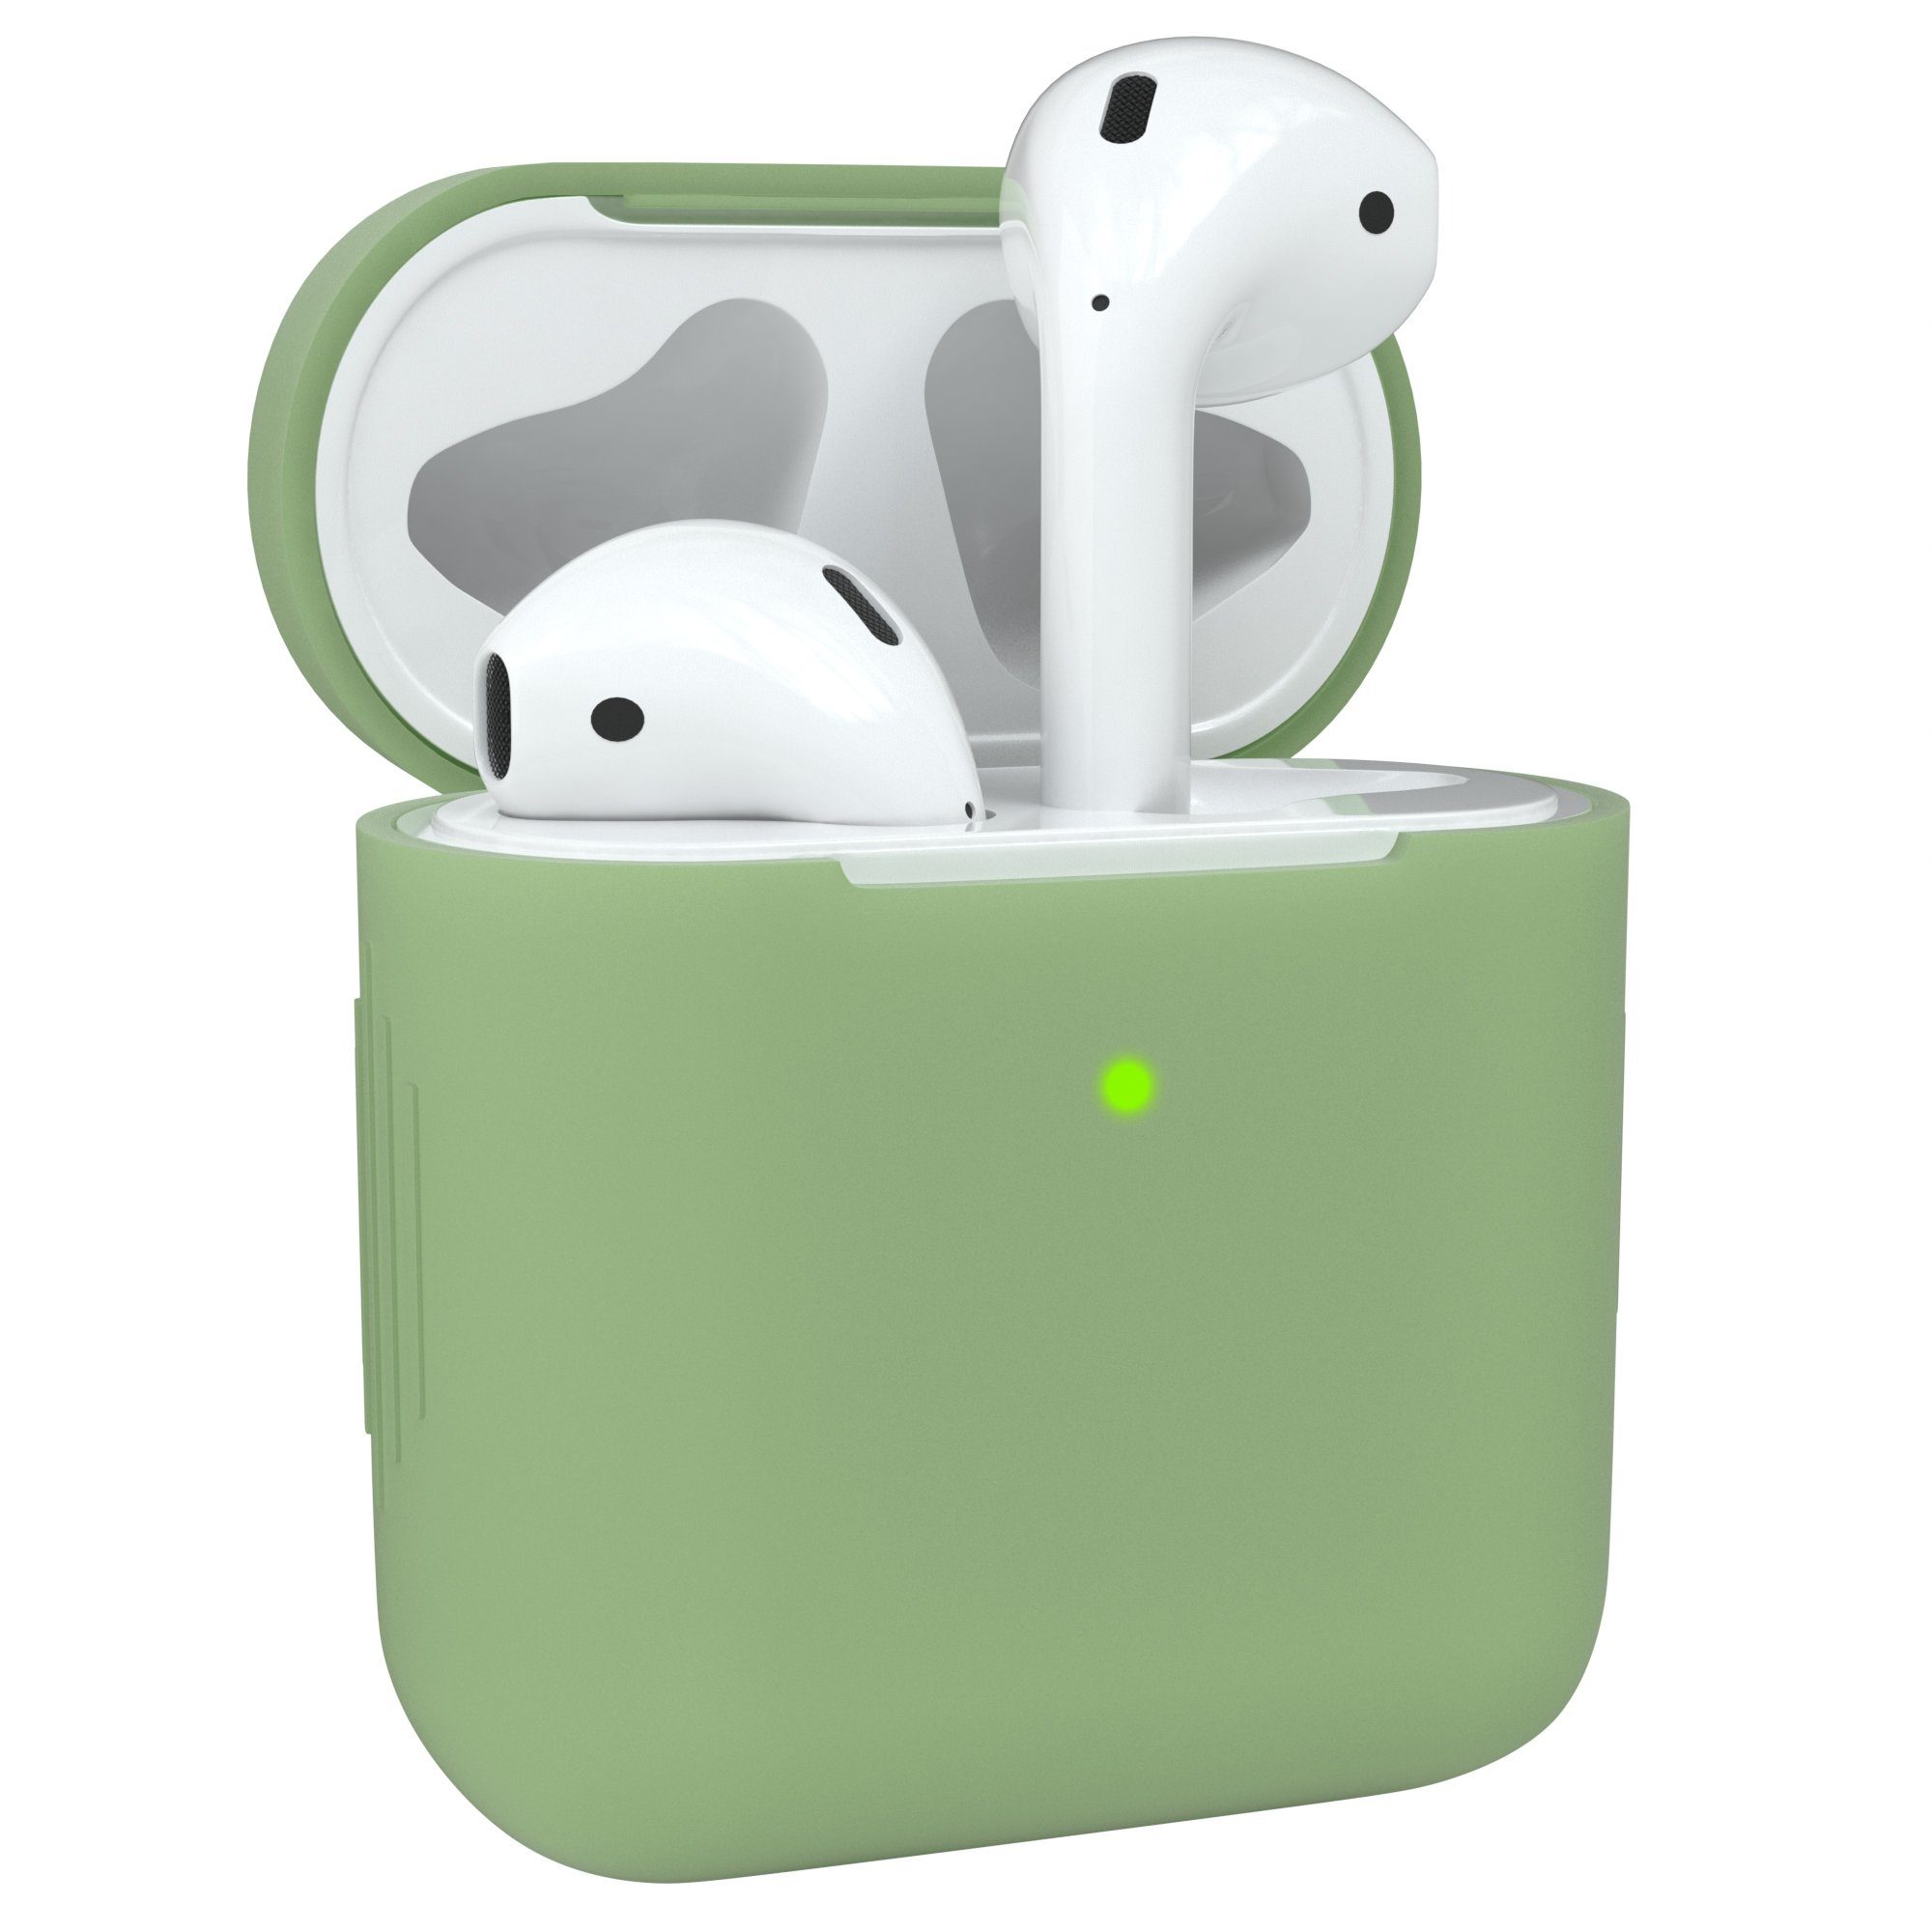 EAZY CASE Kopfhörer-Schutzhülle Silikon Hülle kompatibel mit Apple AirPods 1 & 2, Box Schutzhülle Hülle für Airpods Fullcover Silikoncase Olive Grün